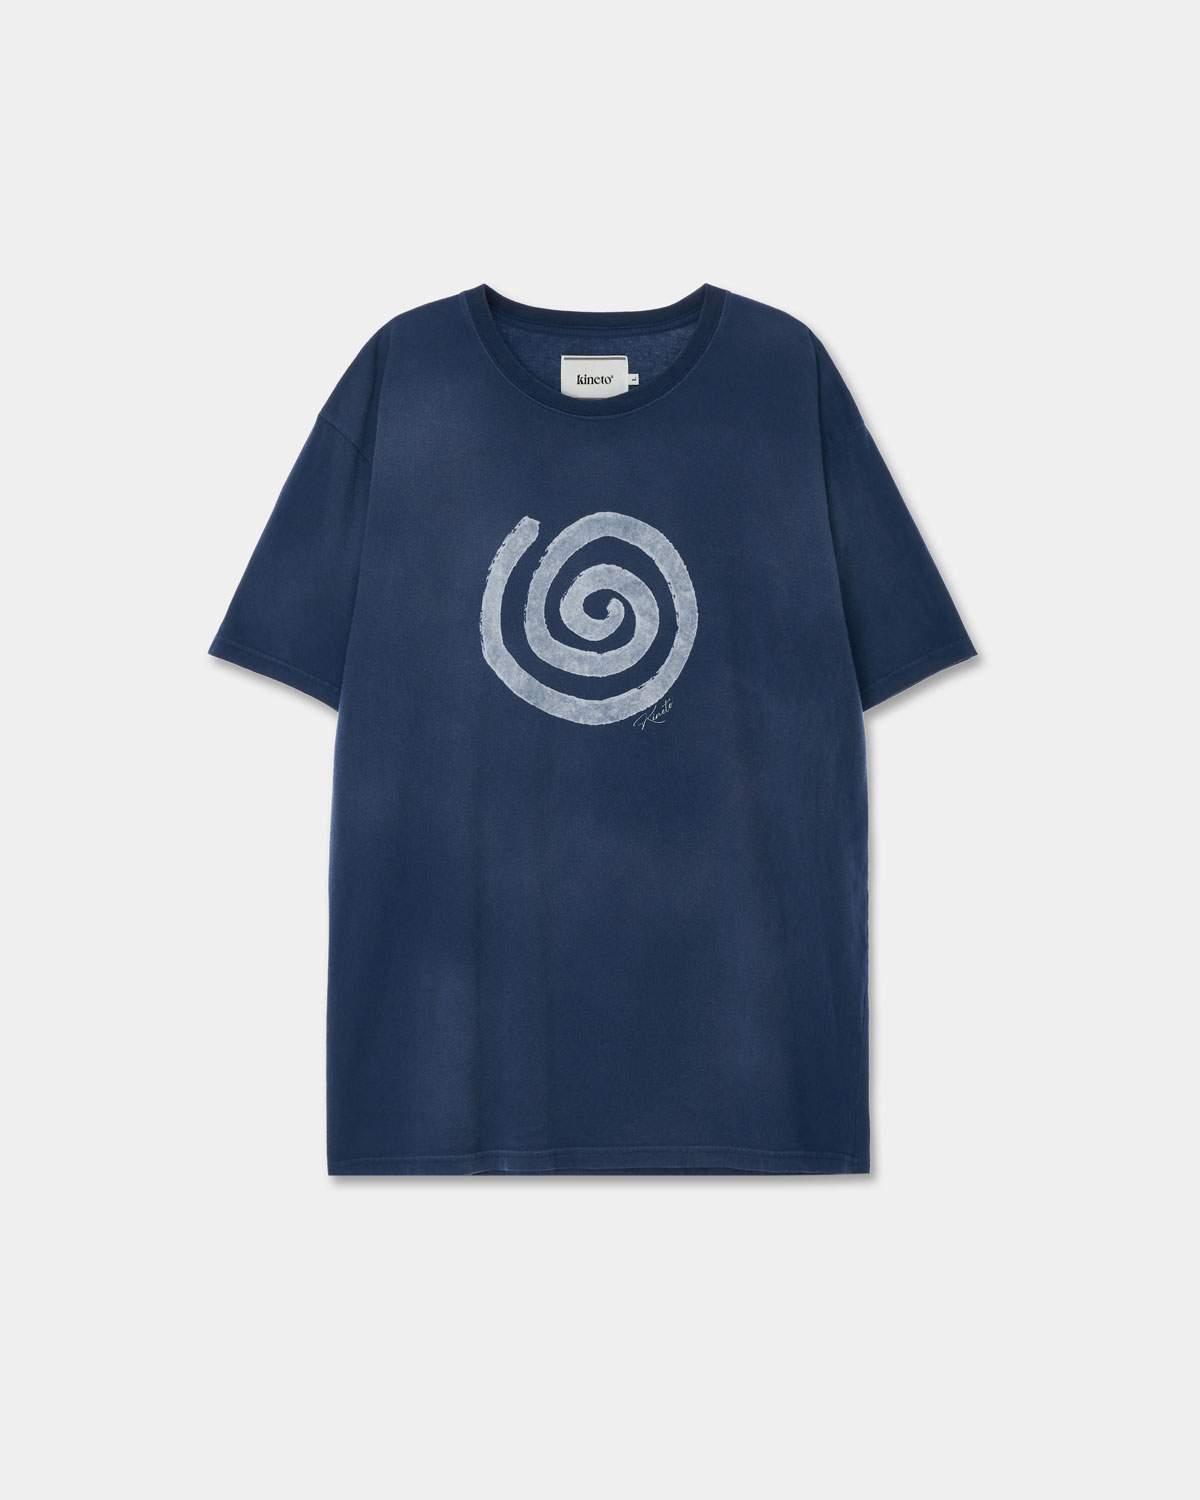 Sulfur Dyed Blow Wind Print T-Shirt _Dusty Blue_예약 배송 05/13